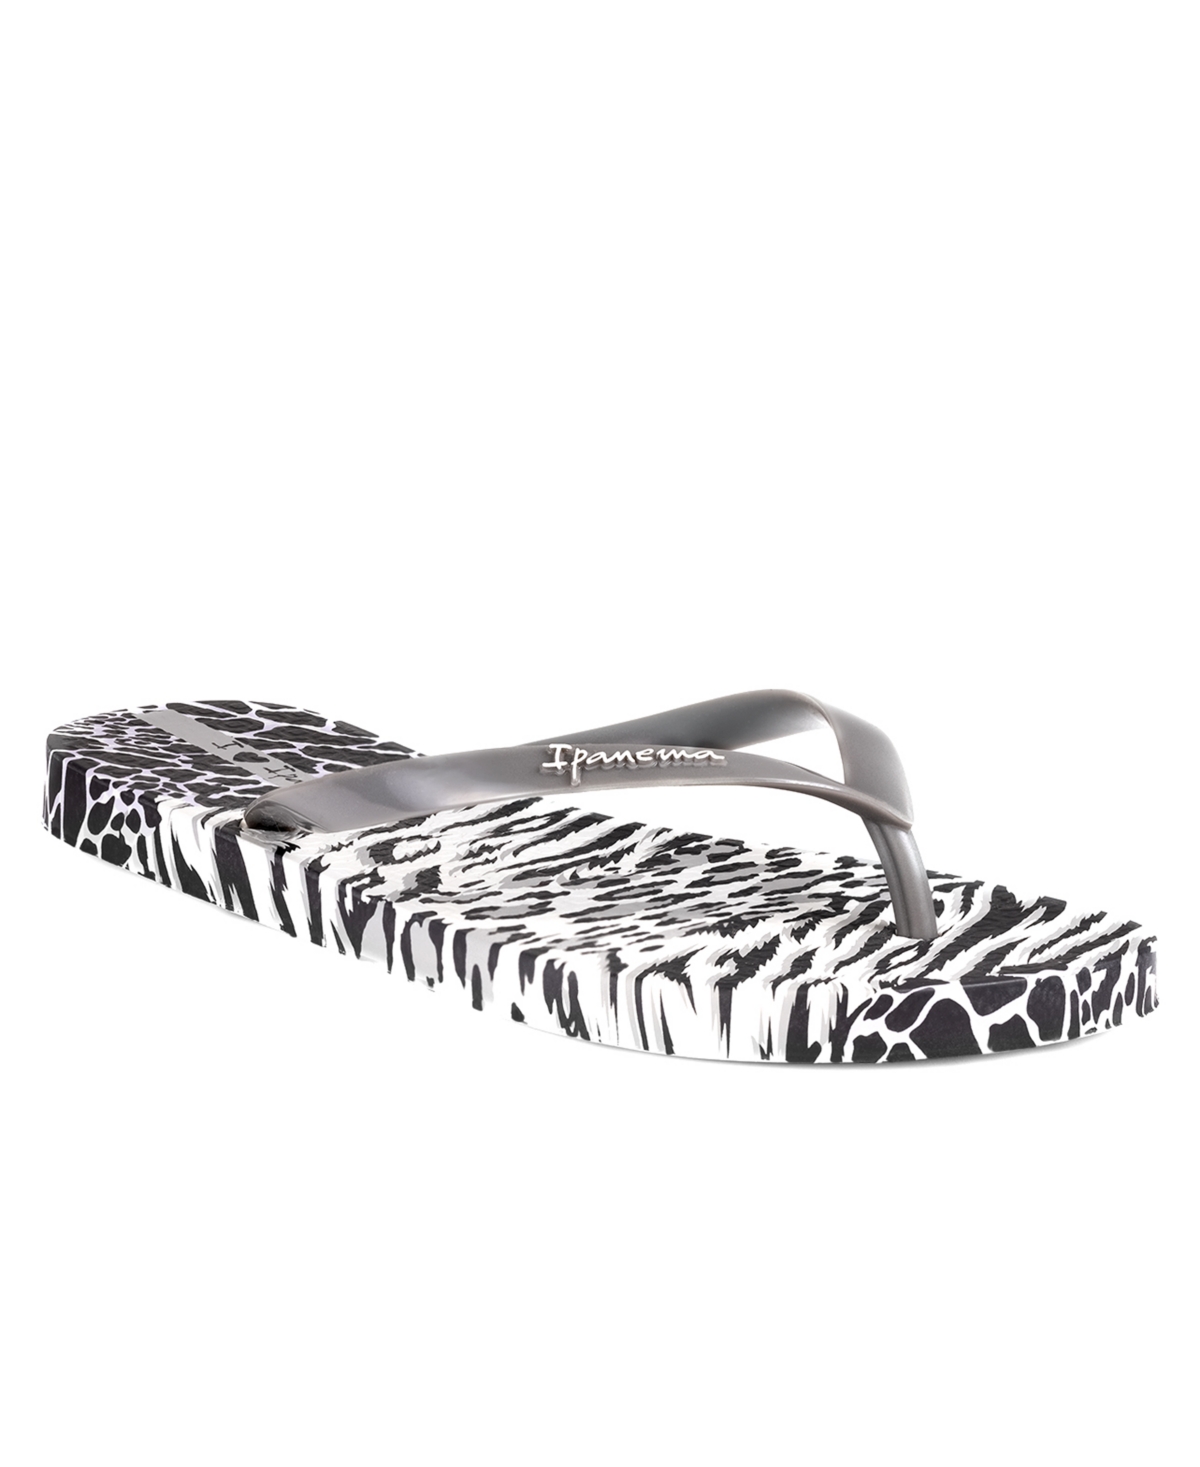 Ipanema Women's Animale Print Ii Flip-flop Sandals Women's Shoes In Gray/black